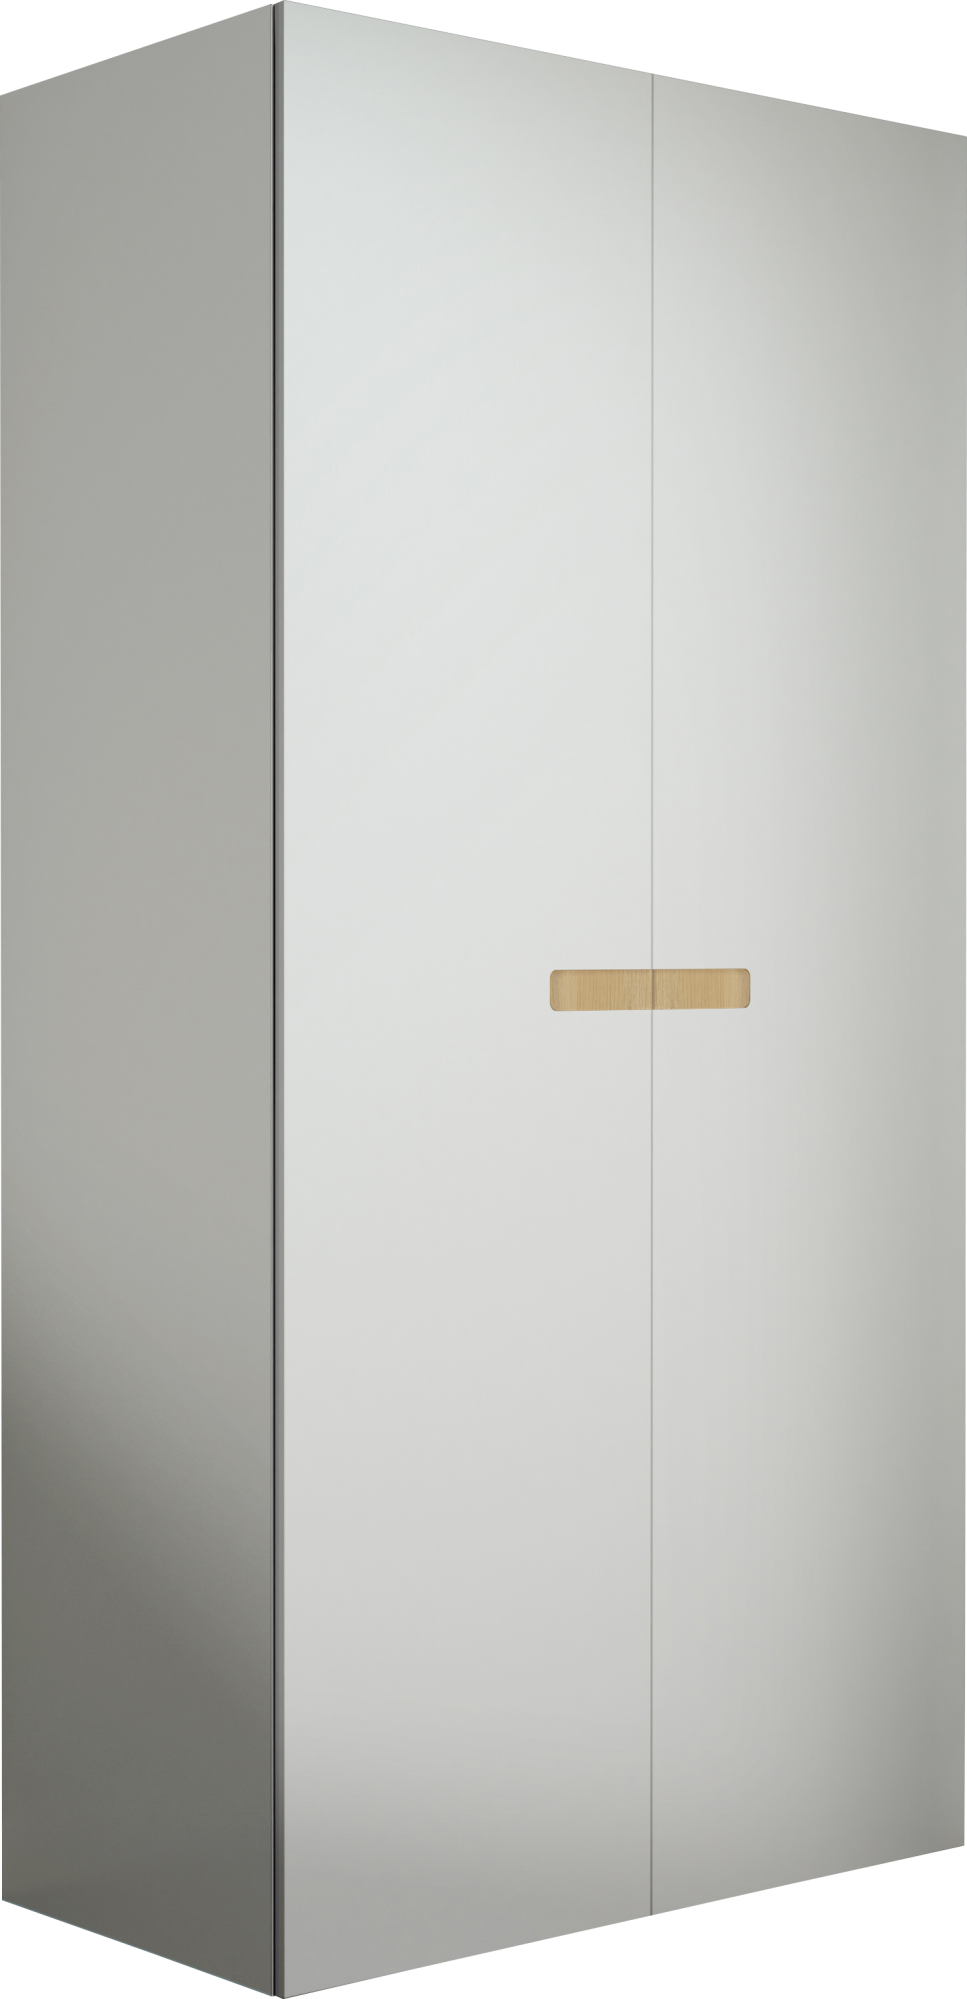 Armario ropero puerta abatible spaceo home nepal blanco-roble 240x120x60cm